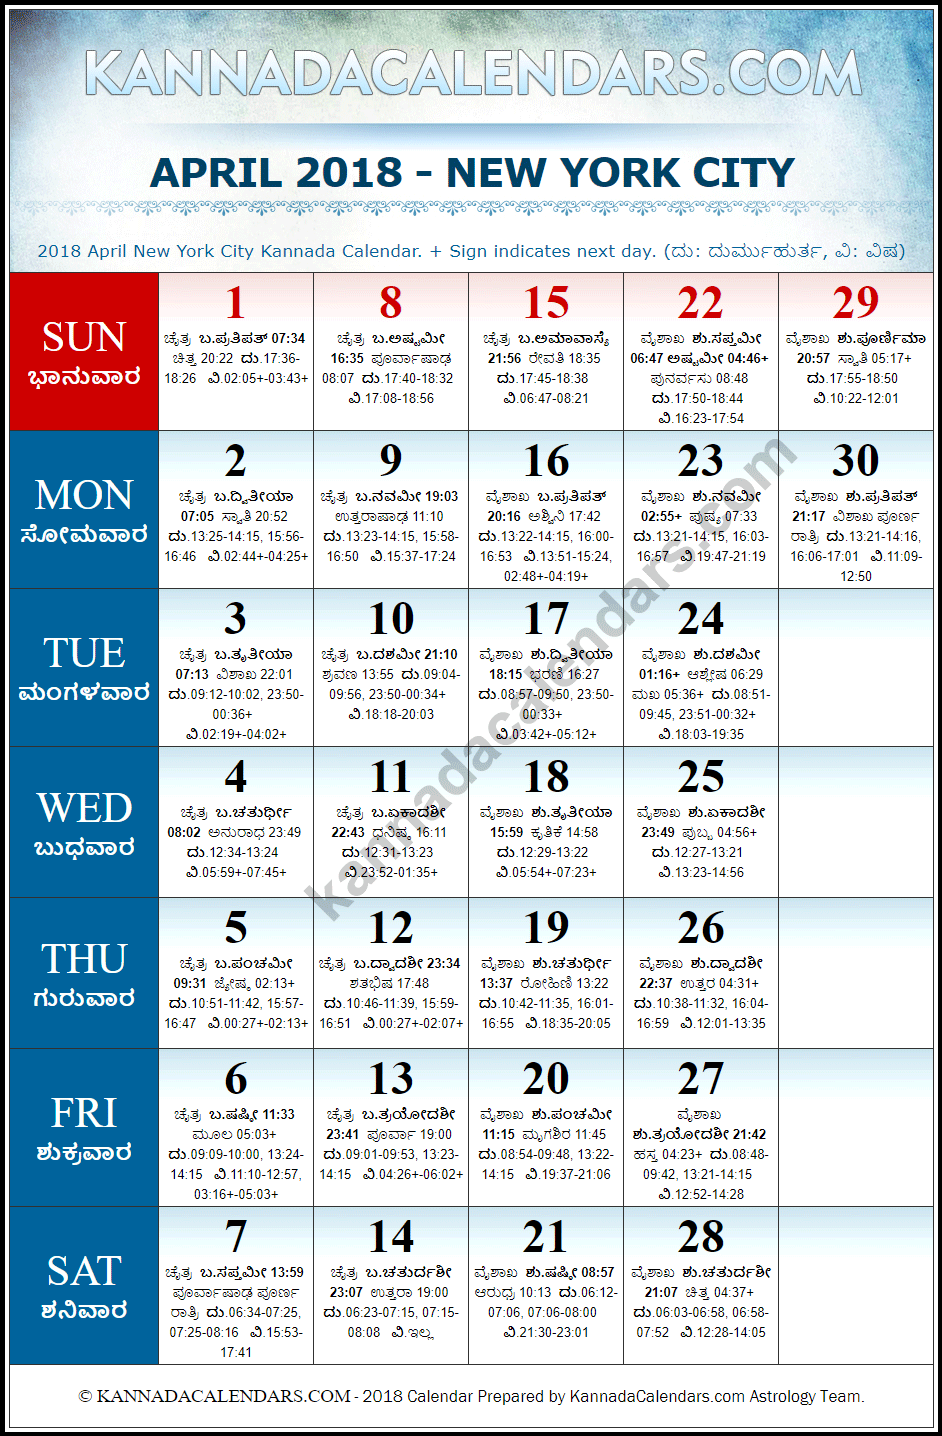 April 2018 Kannada Calendar for New York, USA